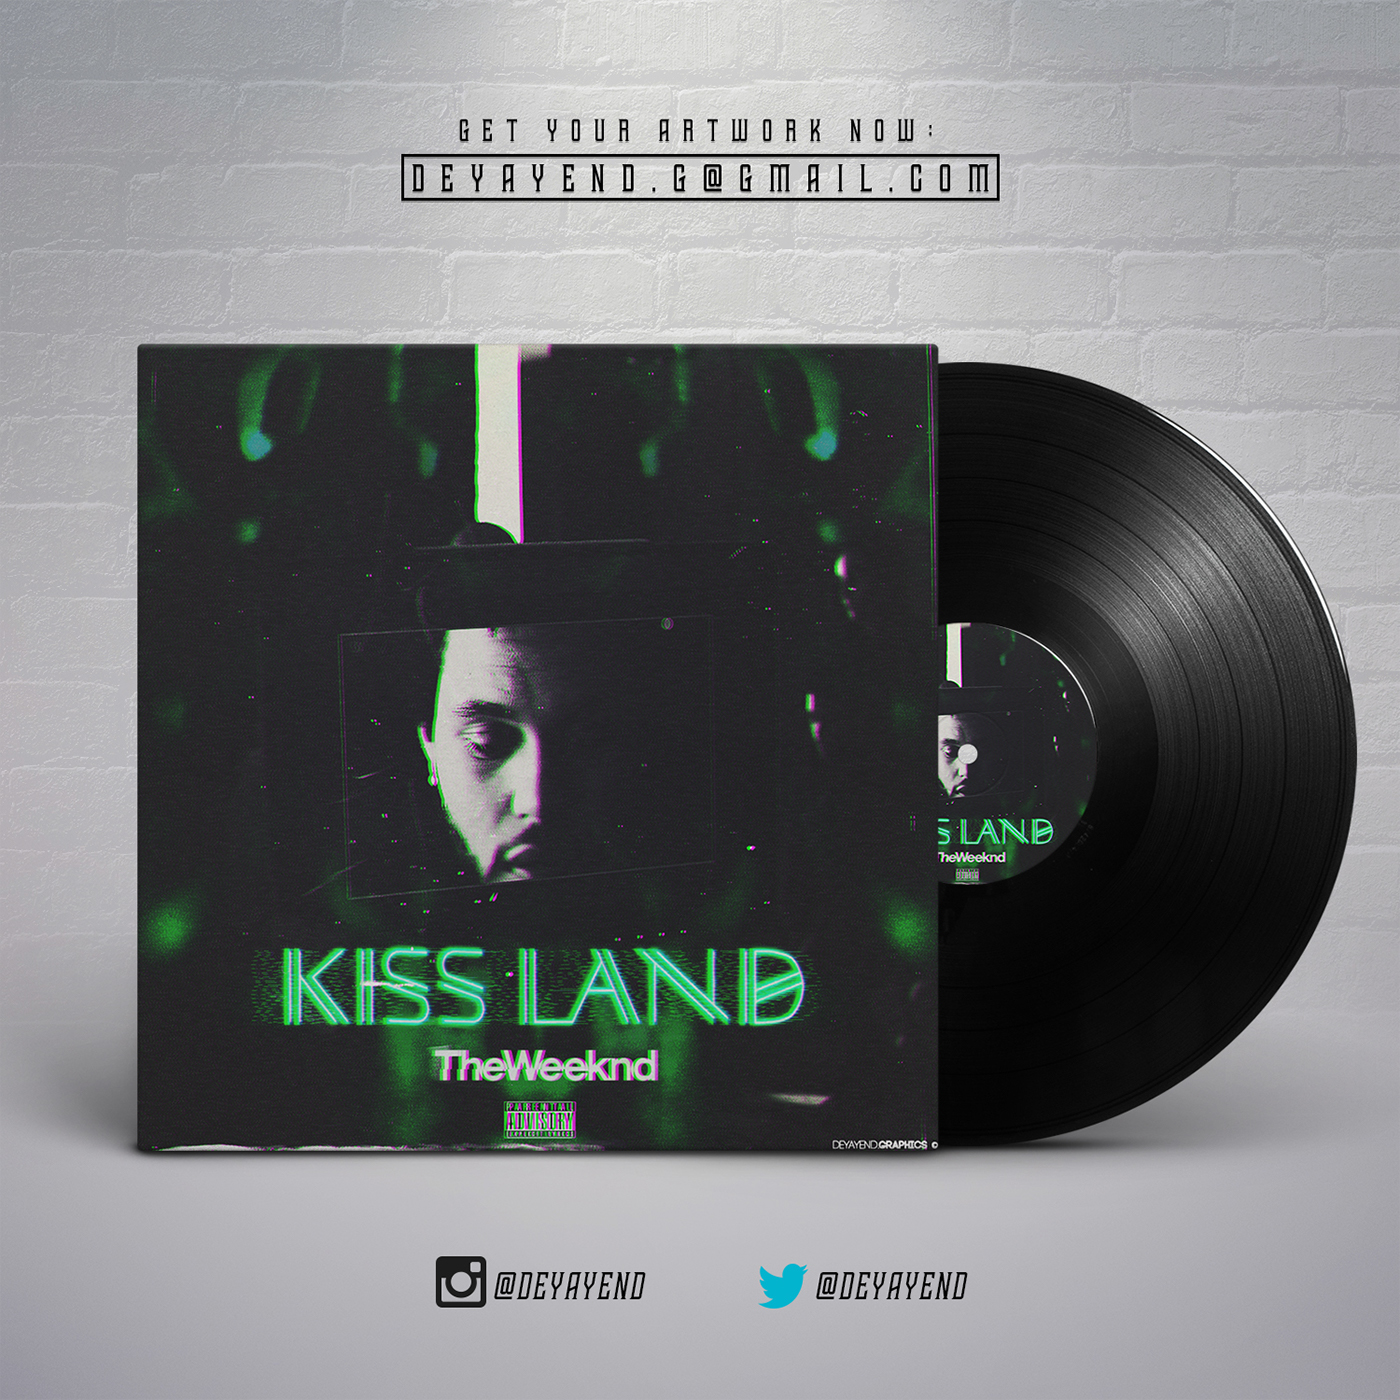 the weeknd,Kiss Land,artwork,album cover,Album,cover,Графический дизайн,Ado...